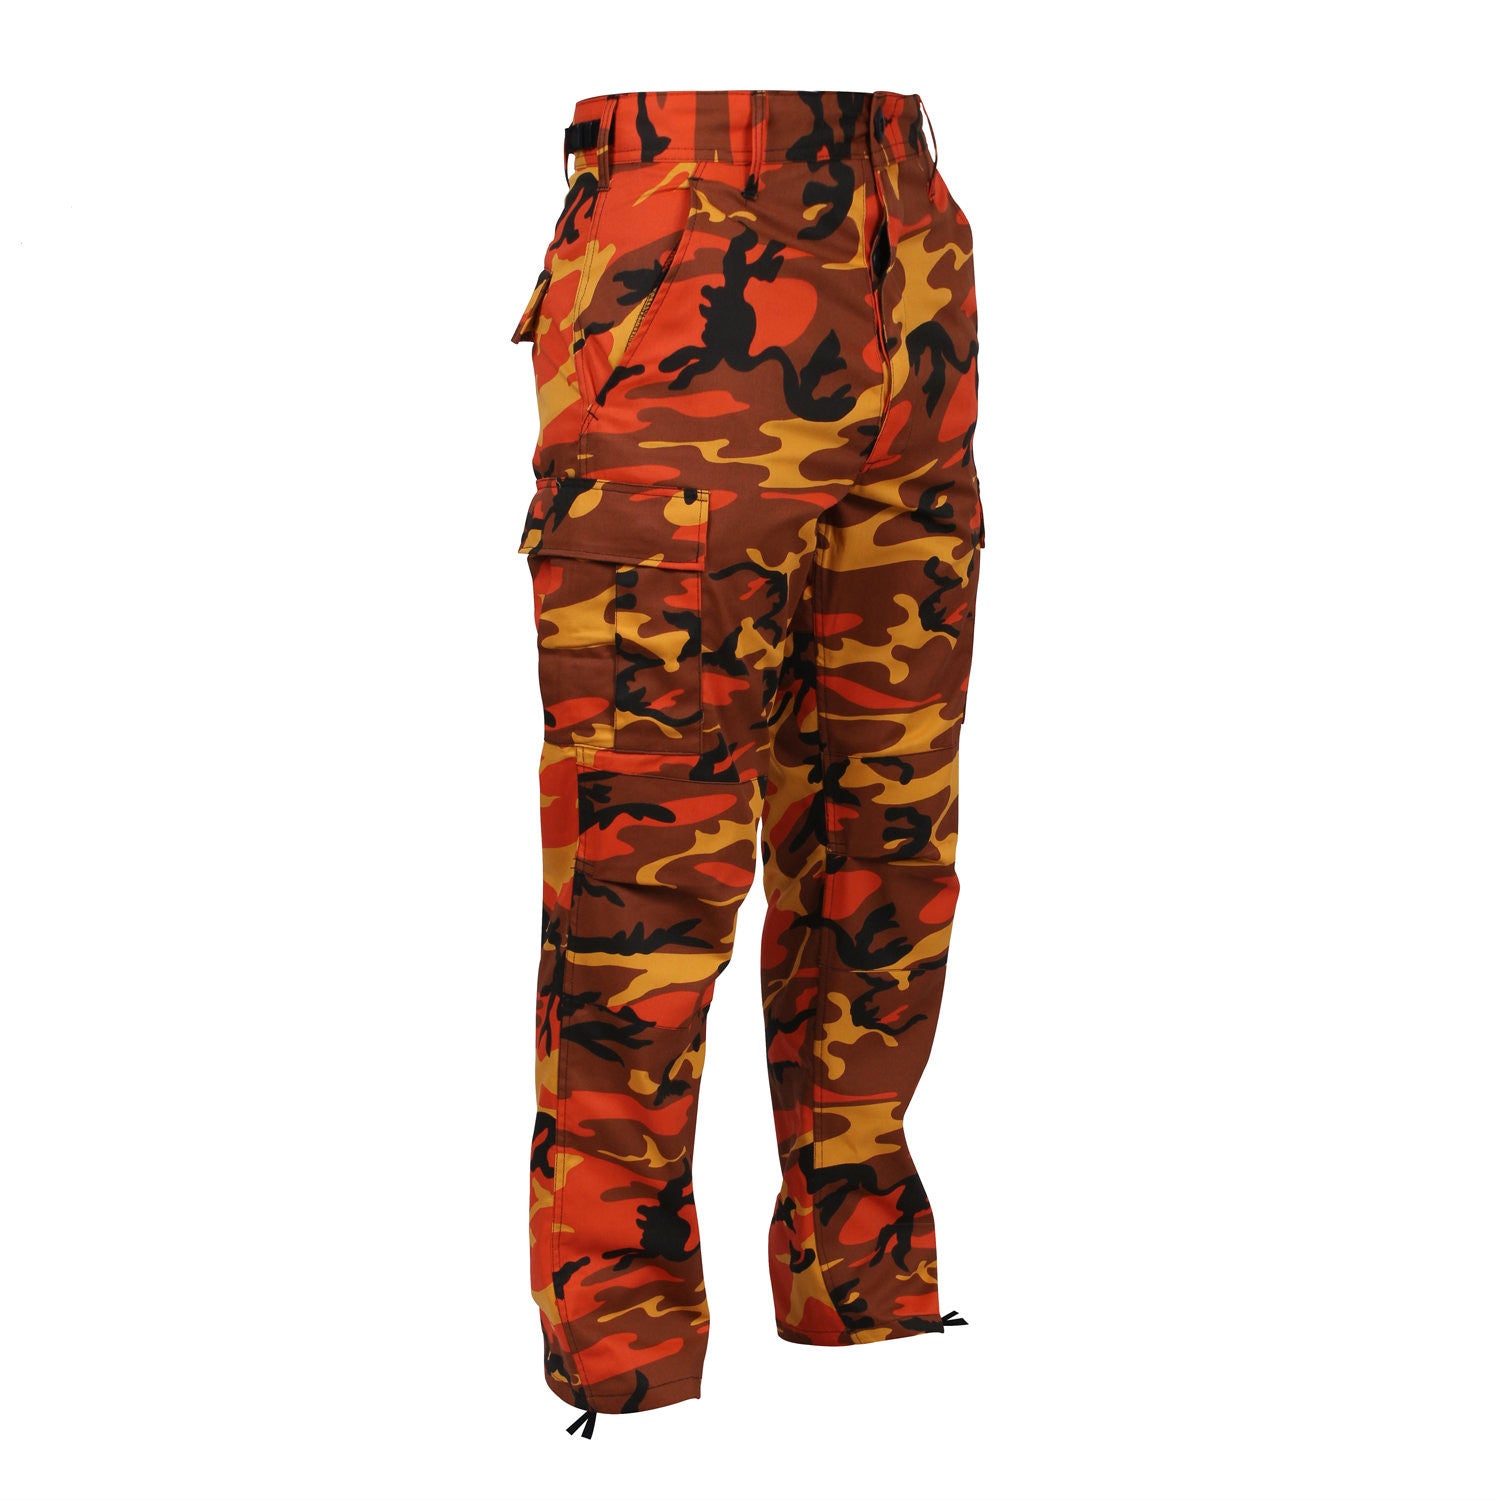 BDU Pants | Tactical Pants For Men | Savage Orange Camouflage